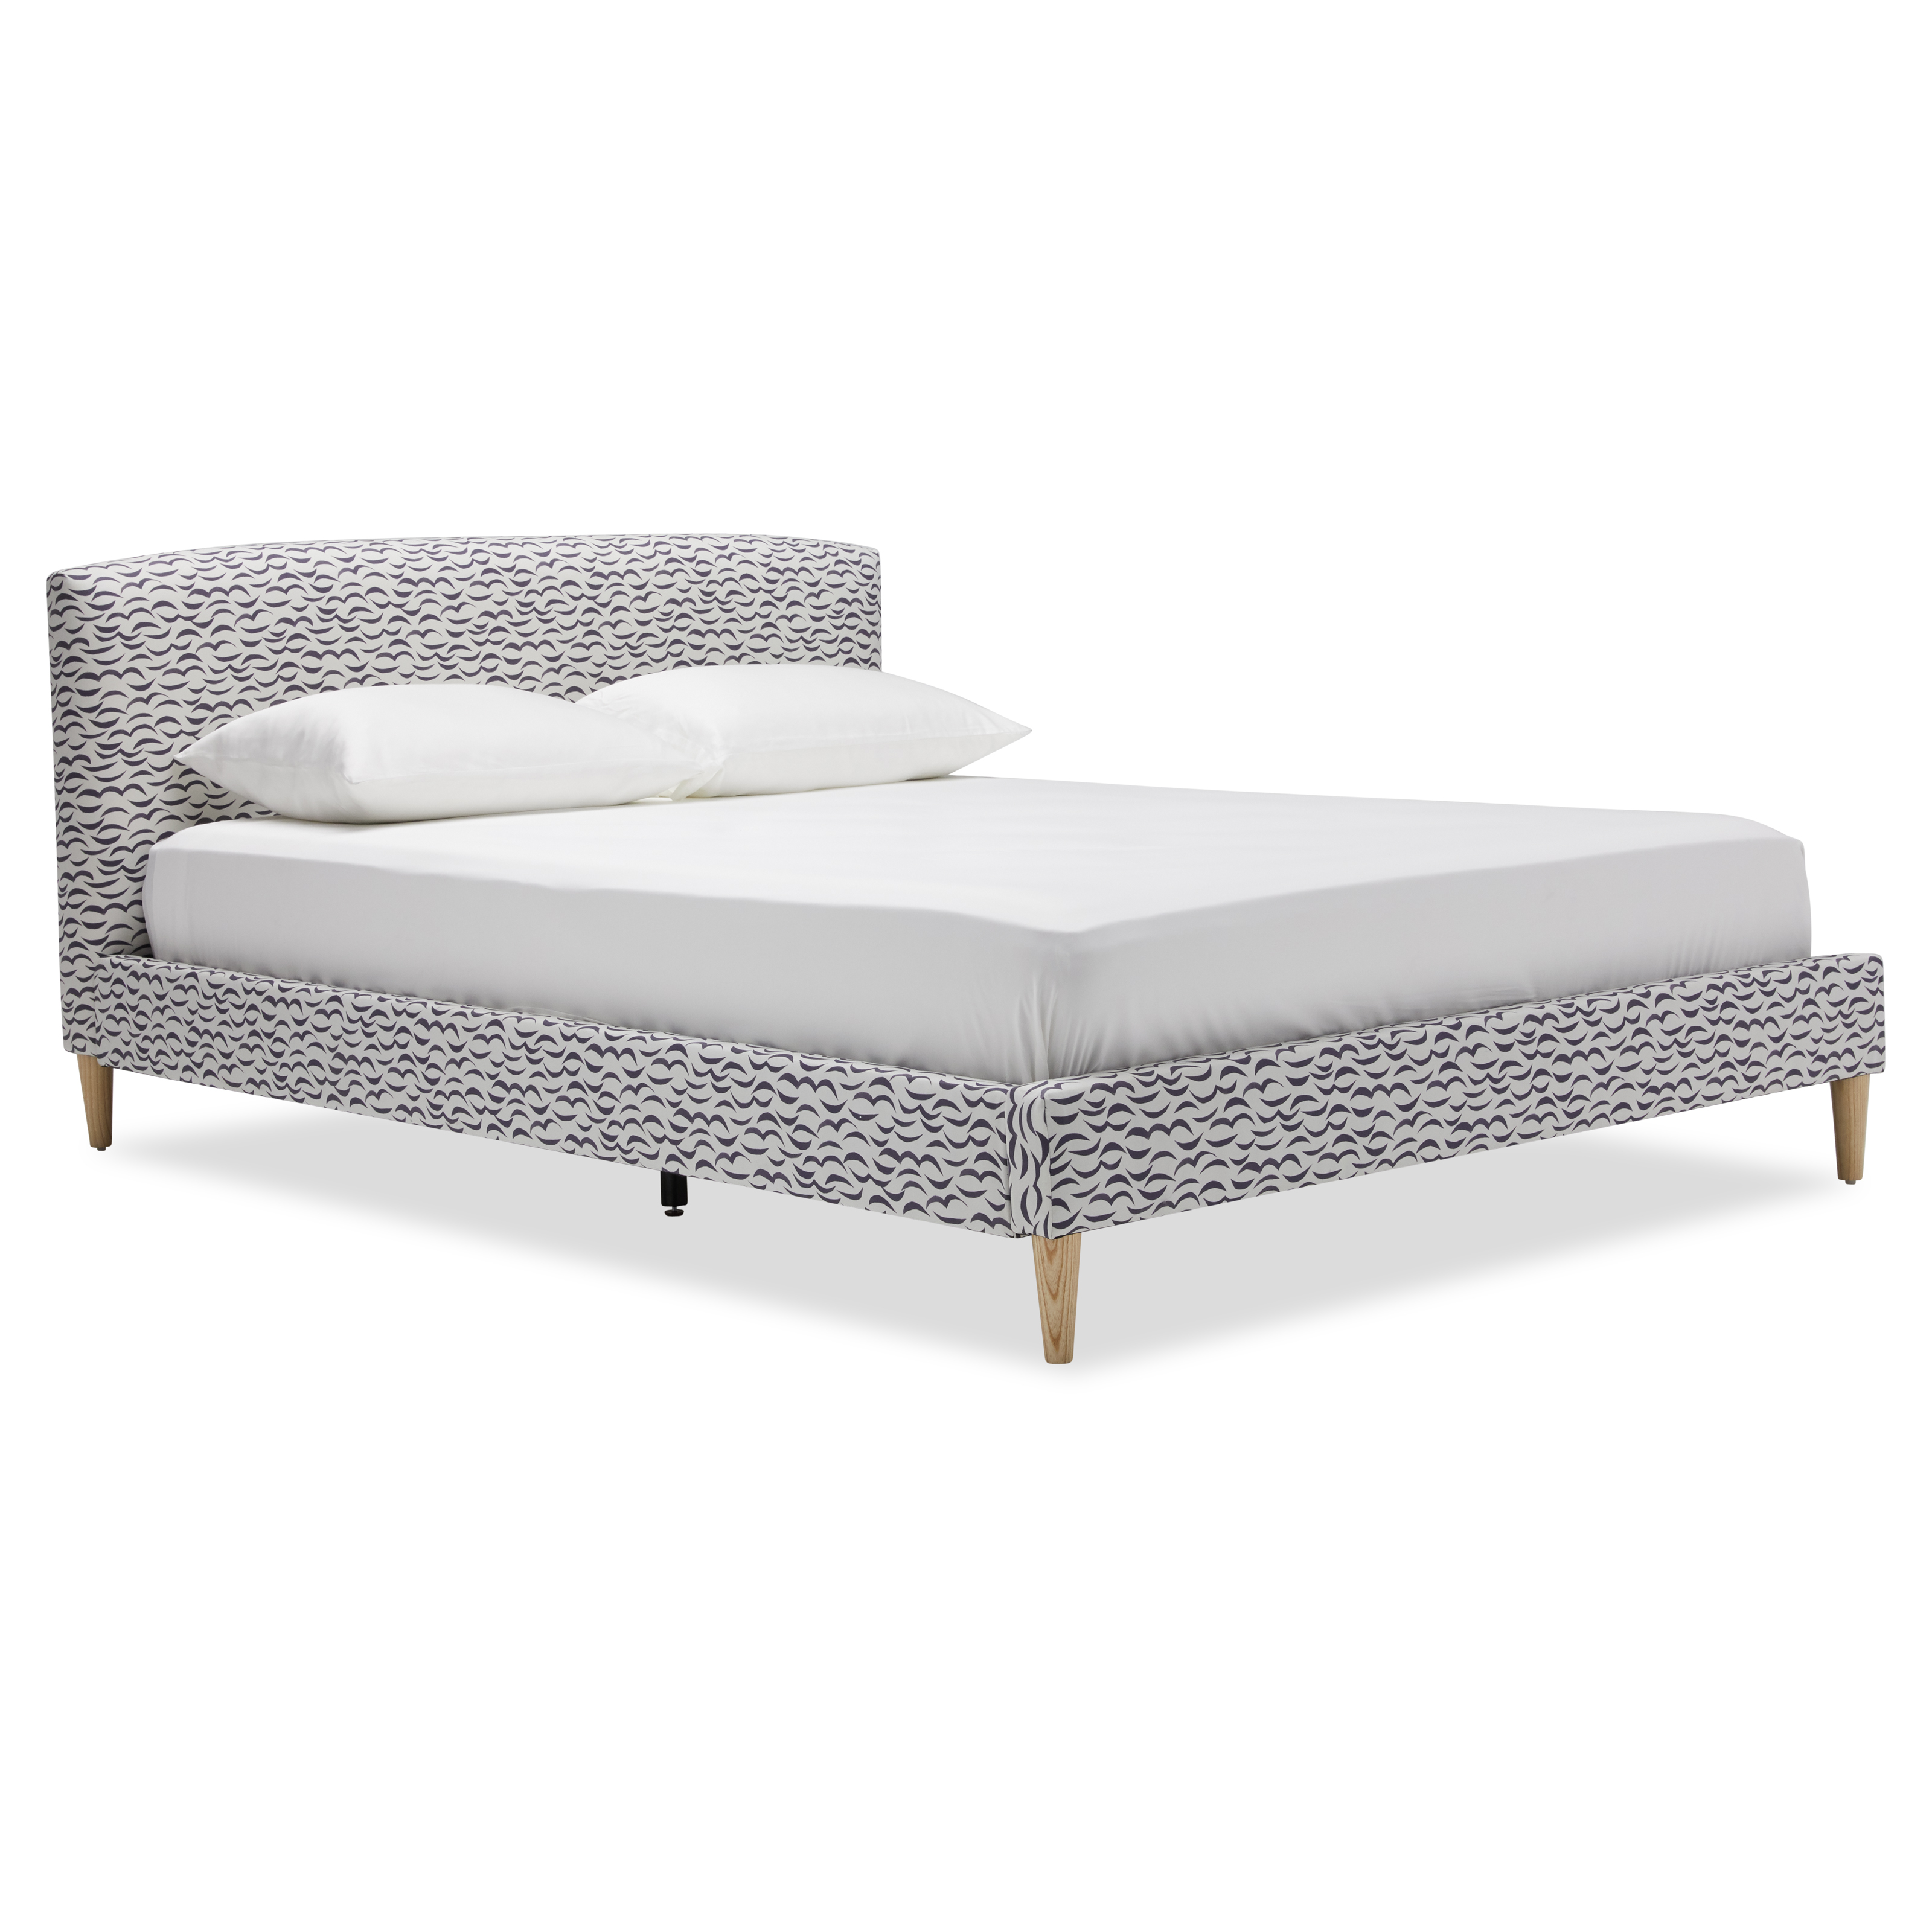 Crescent Moon Upholstered Platform Bed, Multiple Sizes by Drew Barrymore Flower Home - image 1 of 10